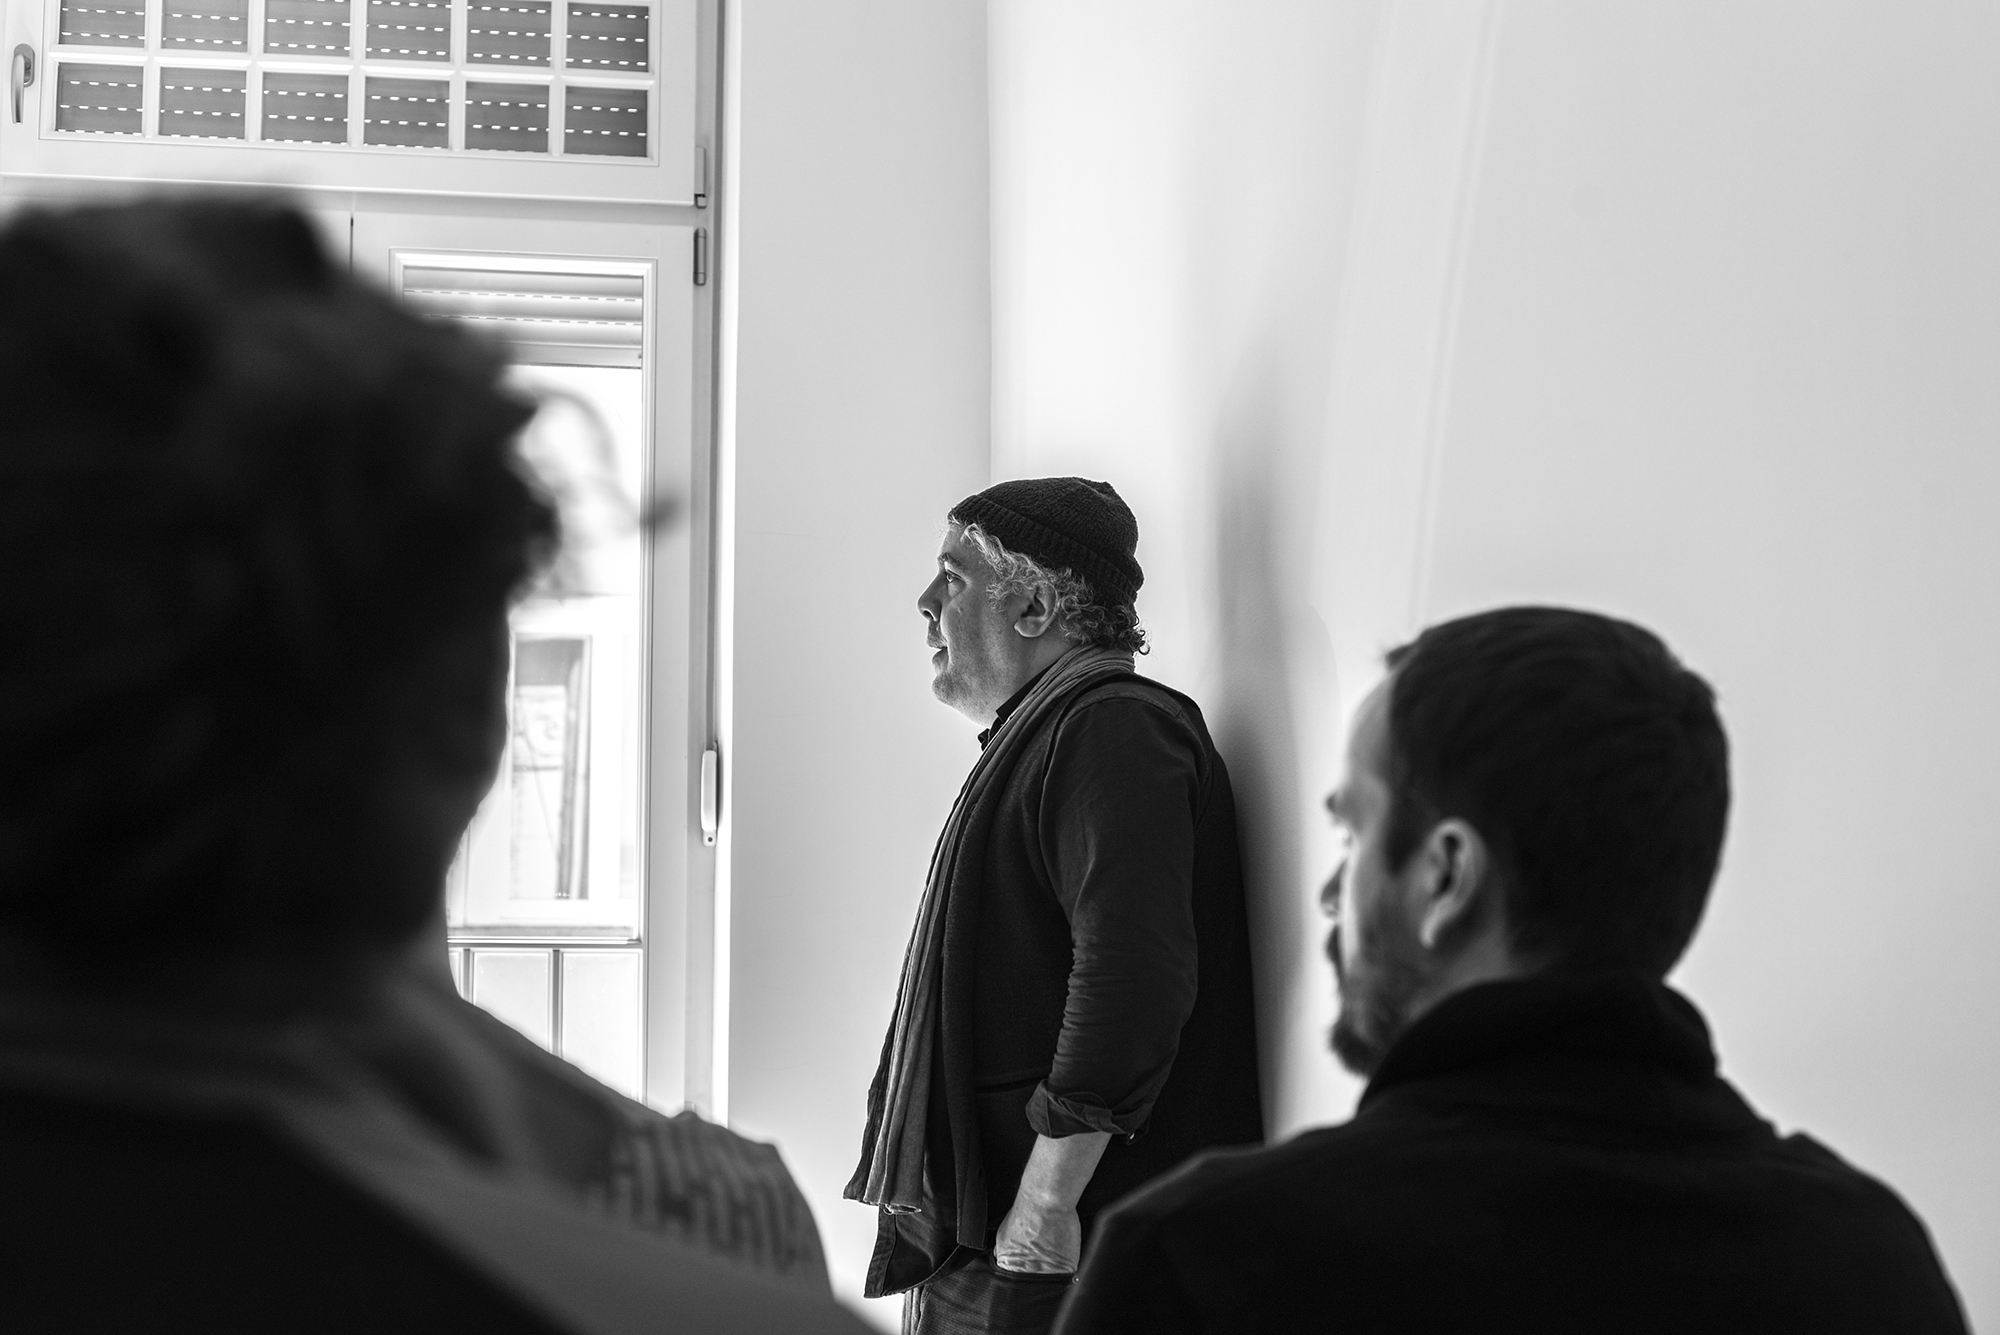 Ron Haviv listens to a lecture. ©Andjela Petrovski